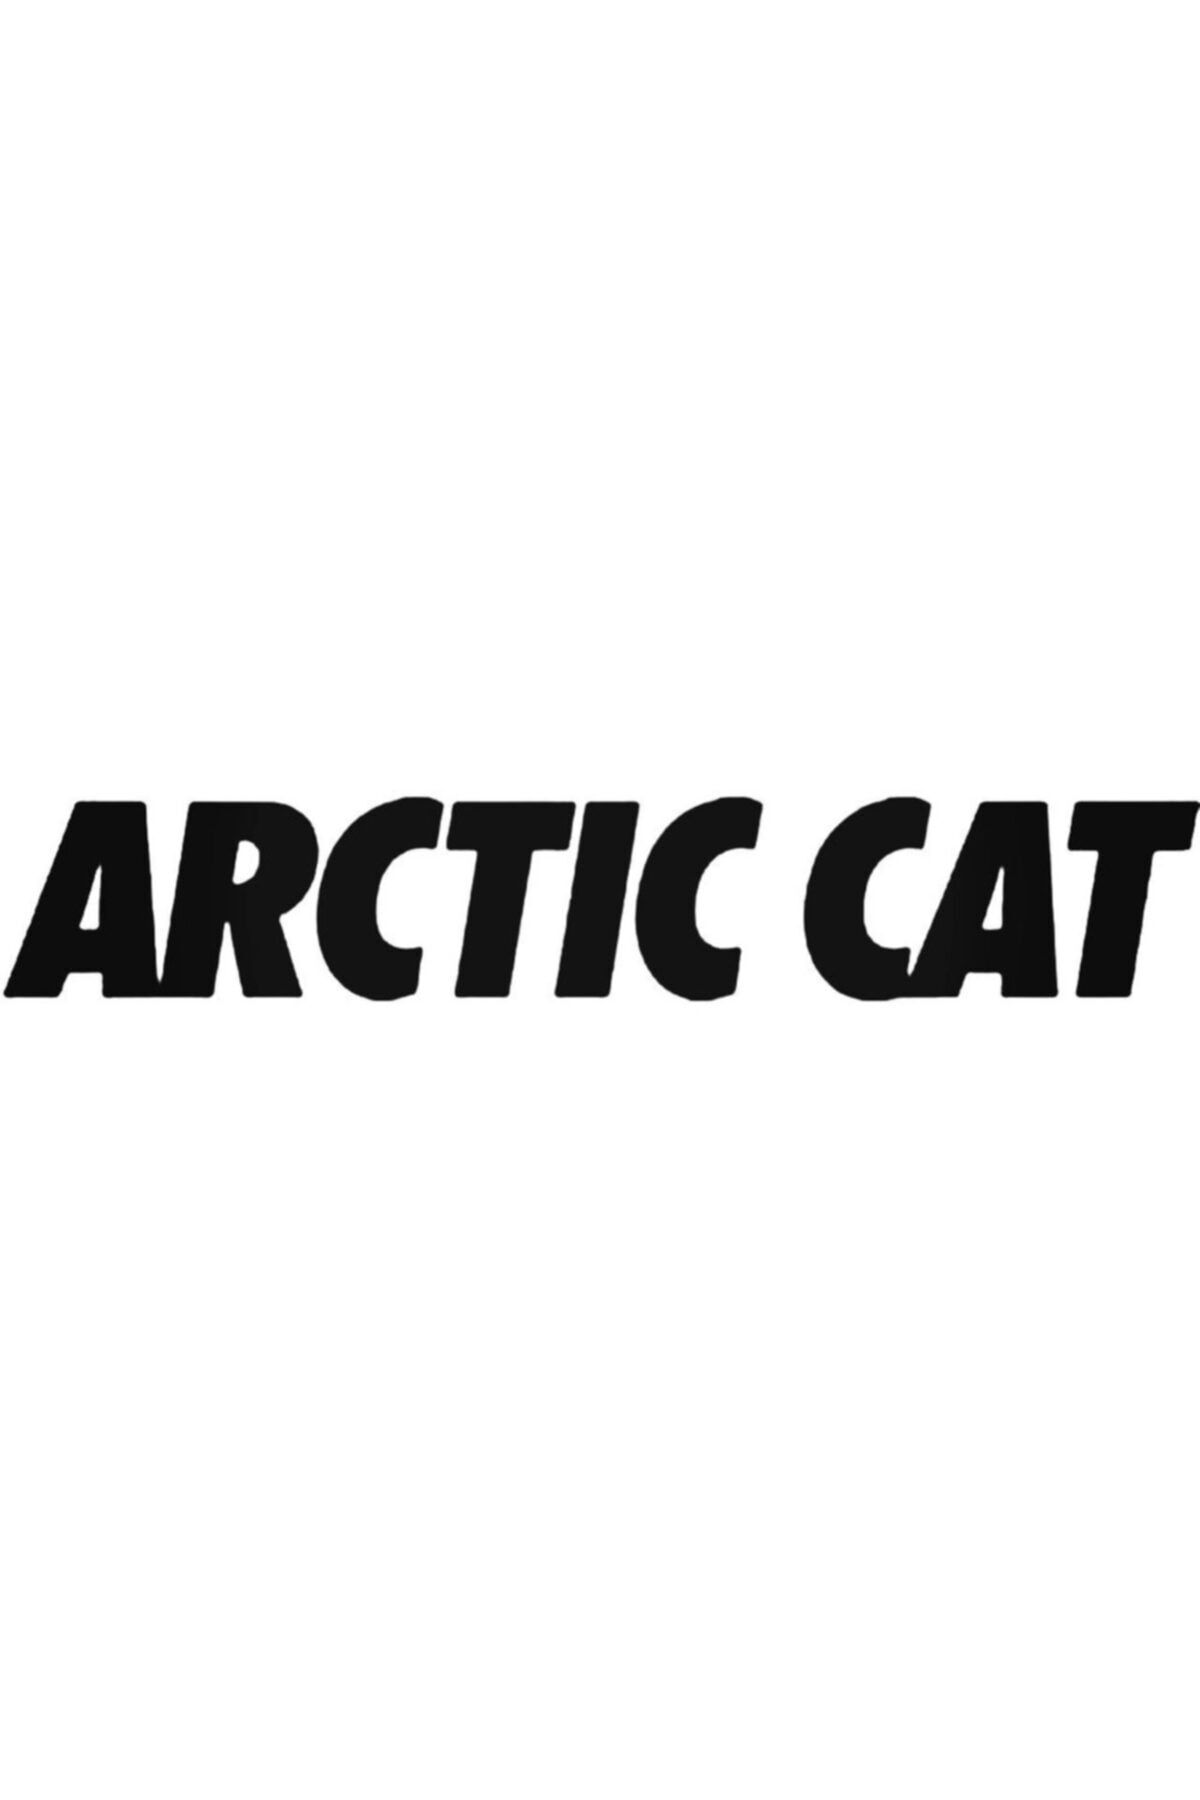 Genel Markalar Corporate Logo Artic Cat Style 1 Sticker Araba Oto Arma Duvar Çıkartma 20 Cm